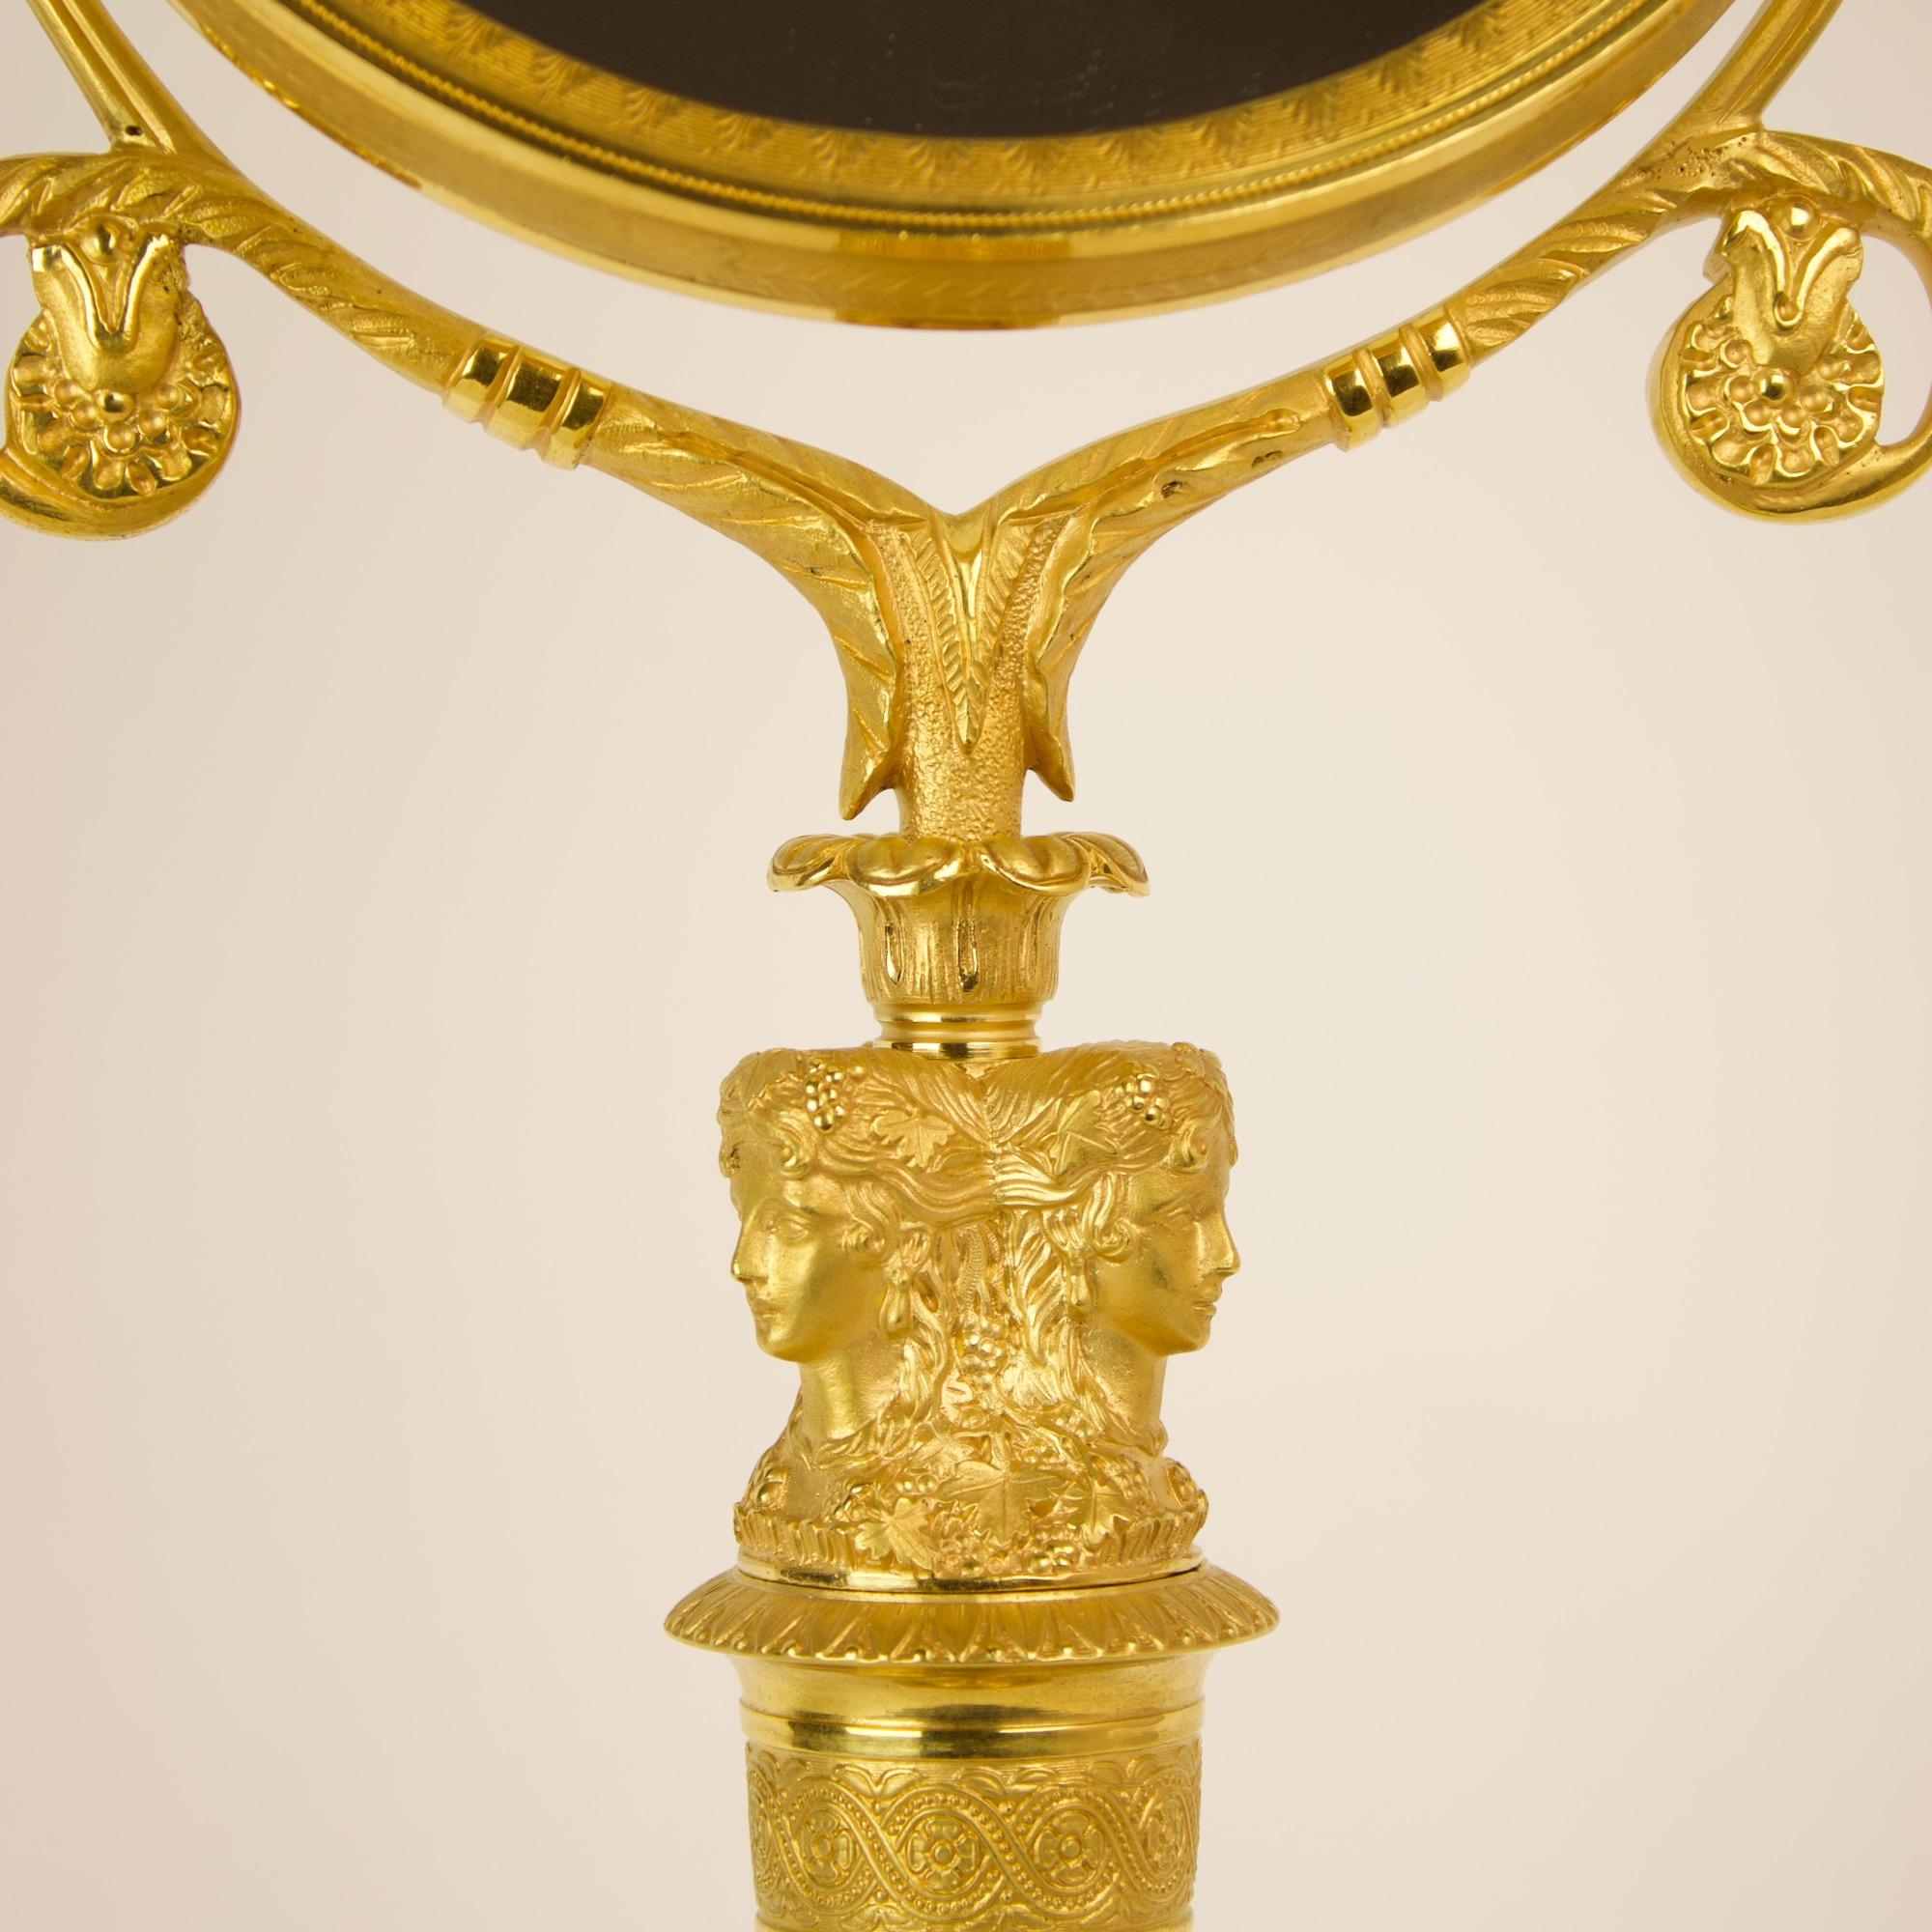 Early 19th century Empire Female Bacchantes caryatids gilt bronze table mirror.

A rare and beautiful Empire gilt-bronze table mirror, a so-called 